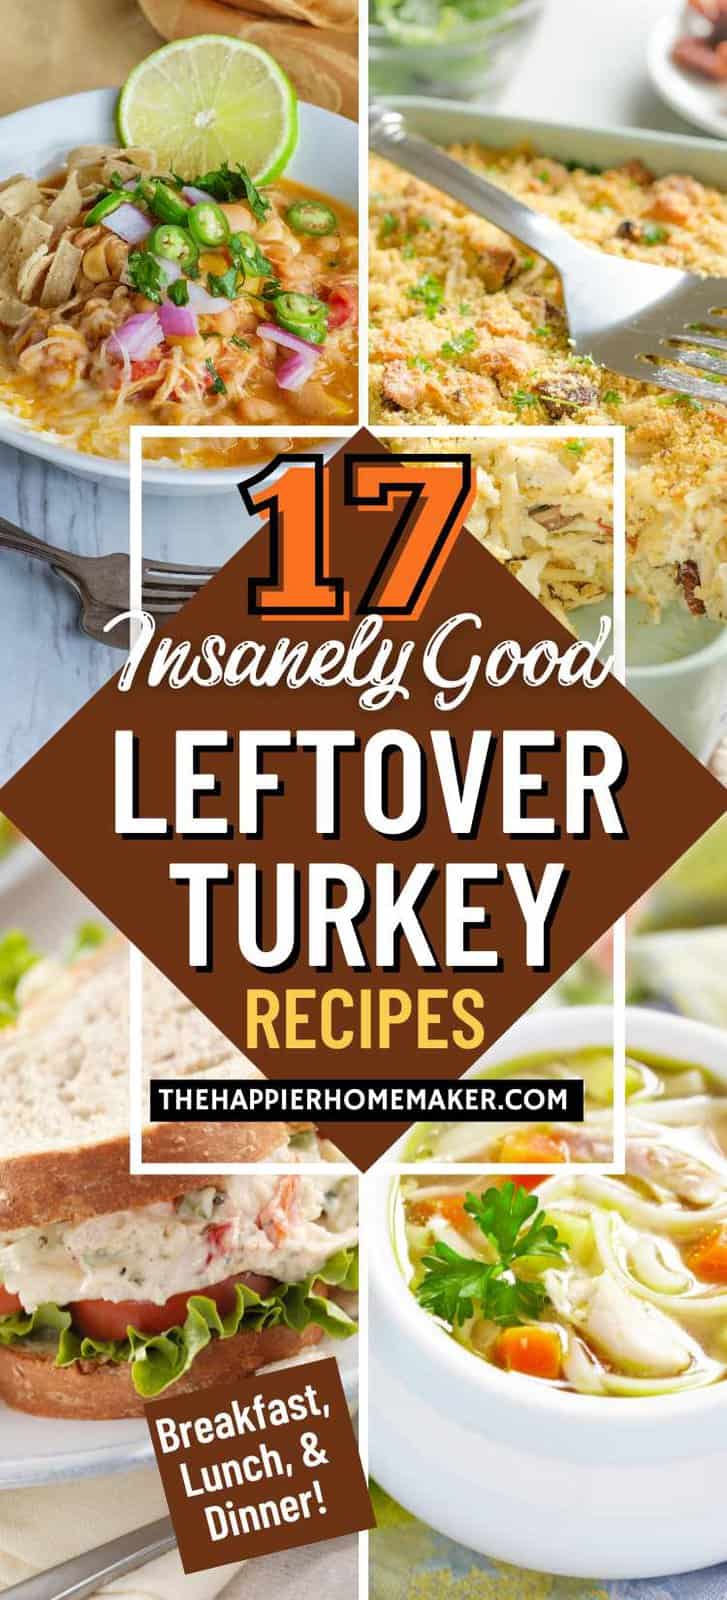 Leftover Turkey Recipes - 17 Delicious Ideas - The Happier Homemaker